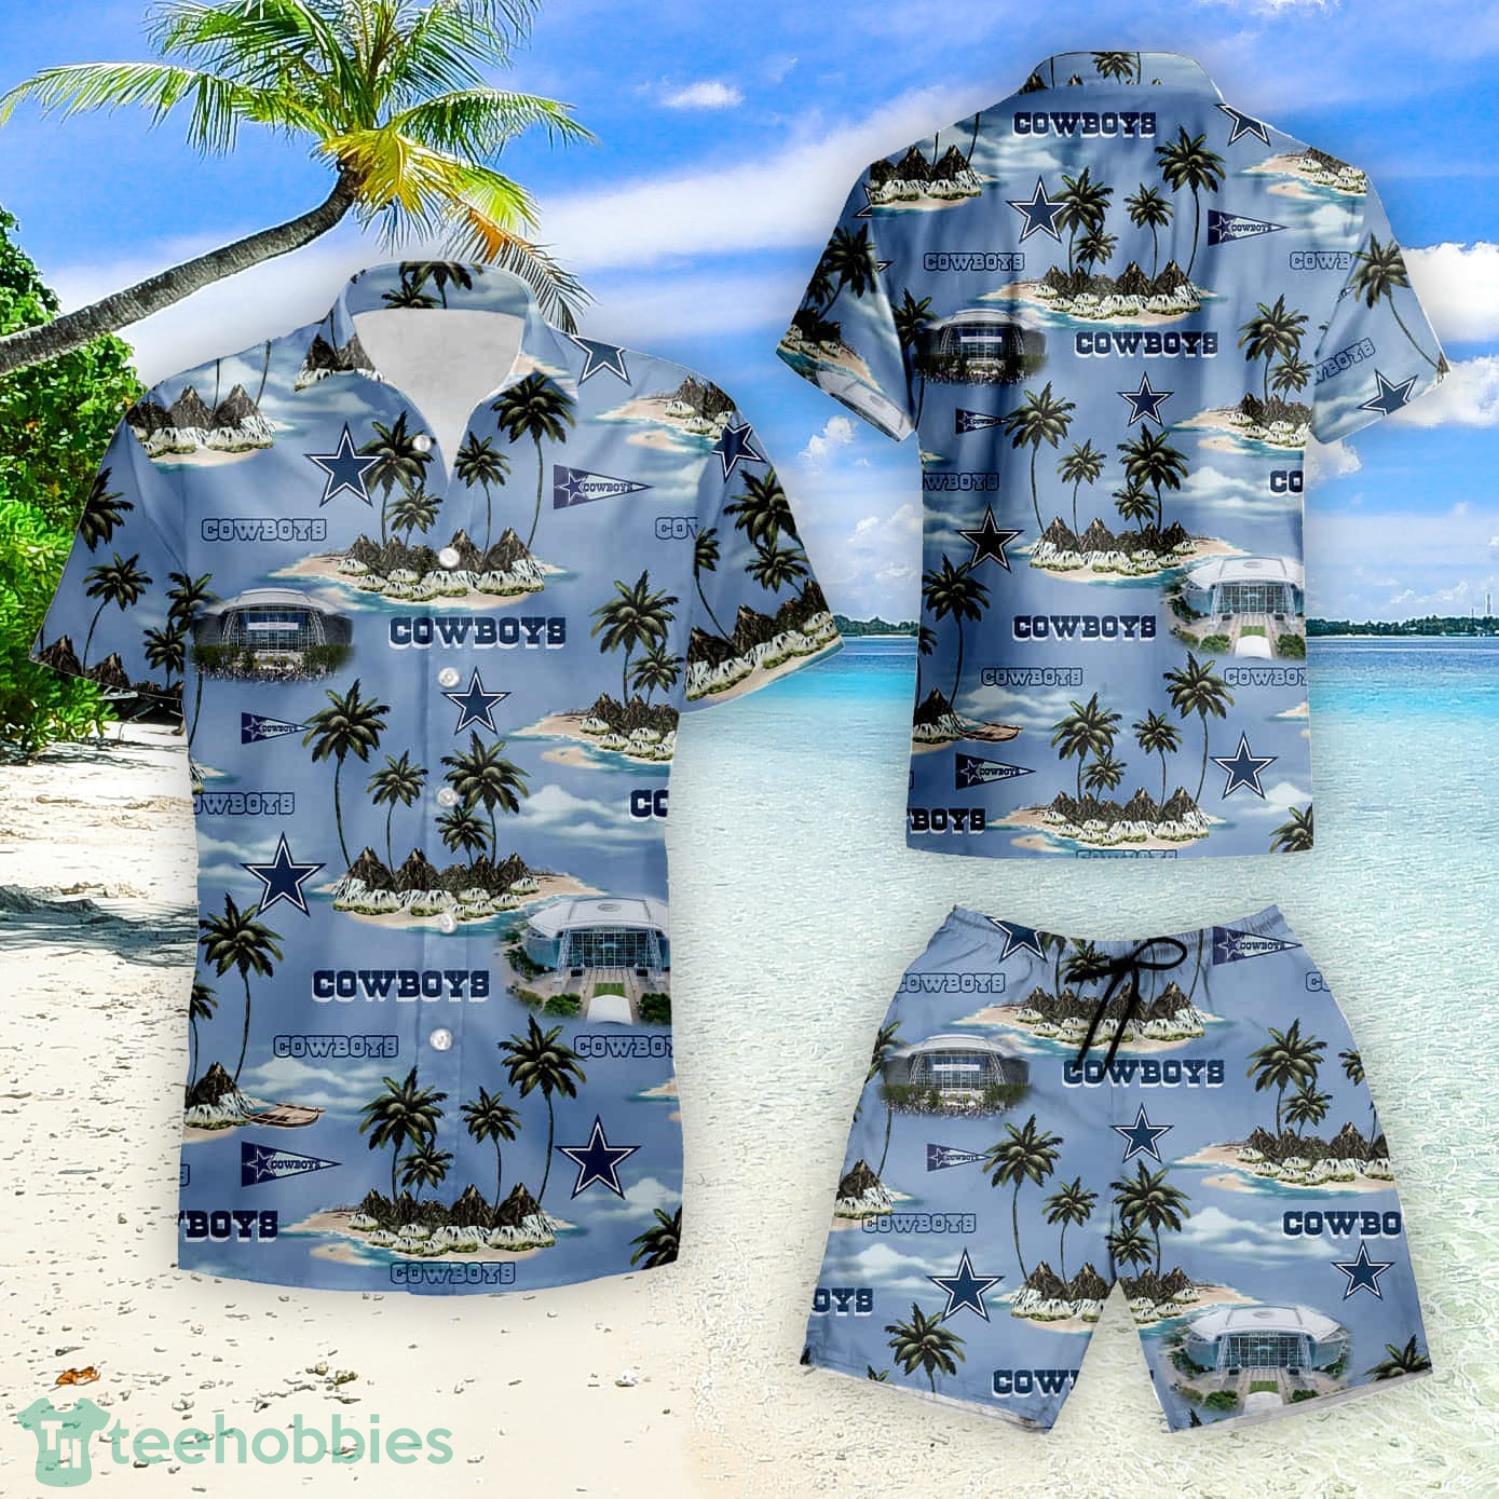 NFL Dallas Cowboys Big Logo Hawaiian Summer Beach Shirt Full Print